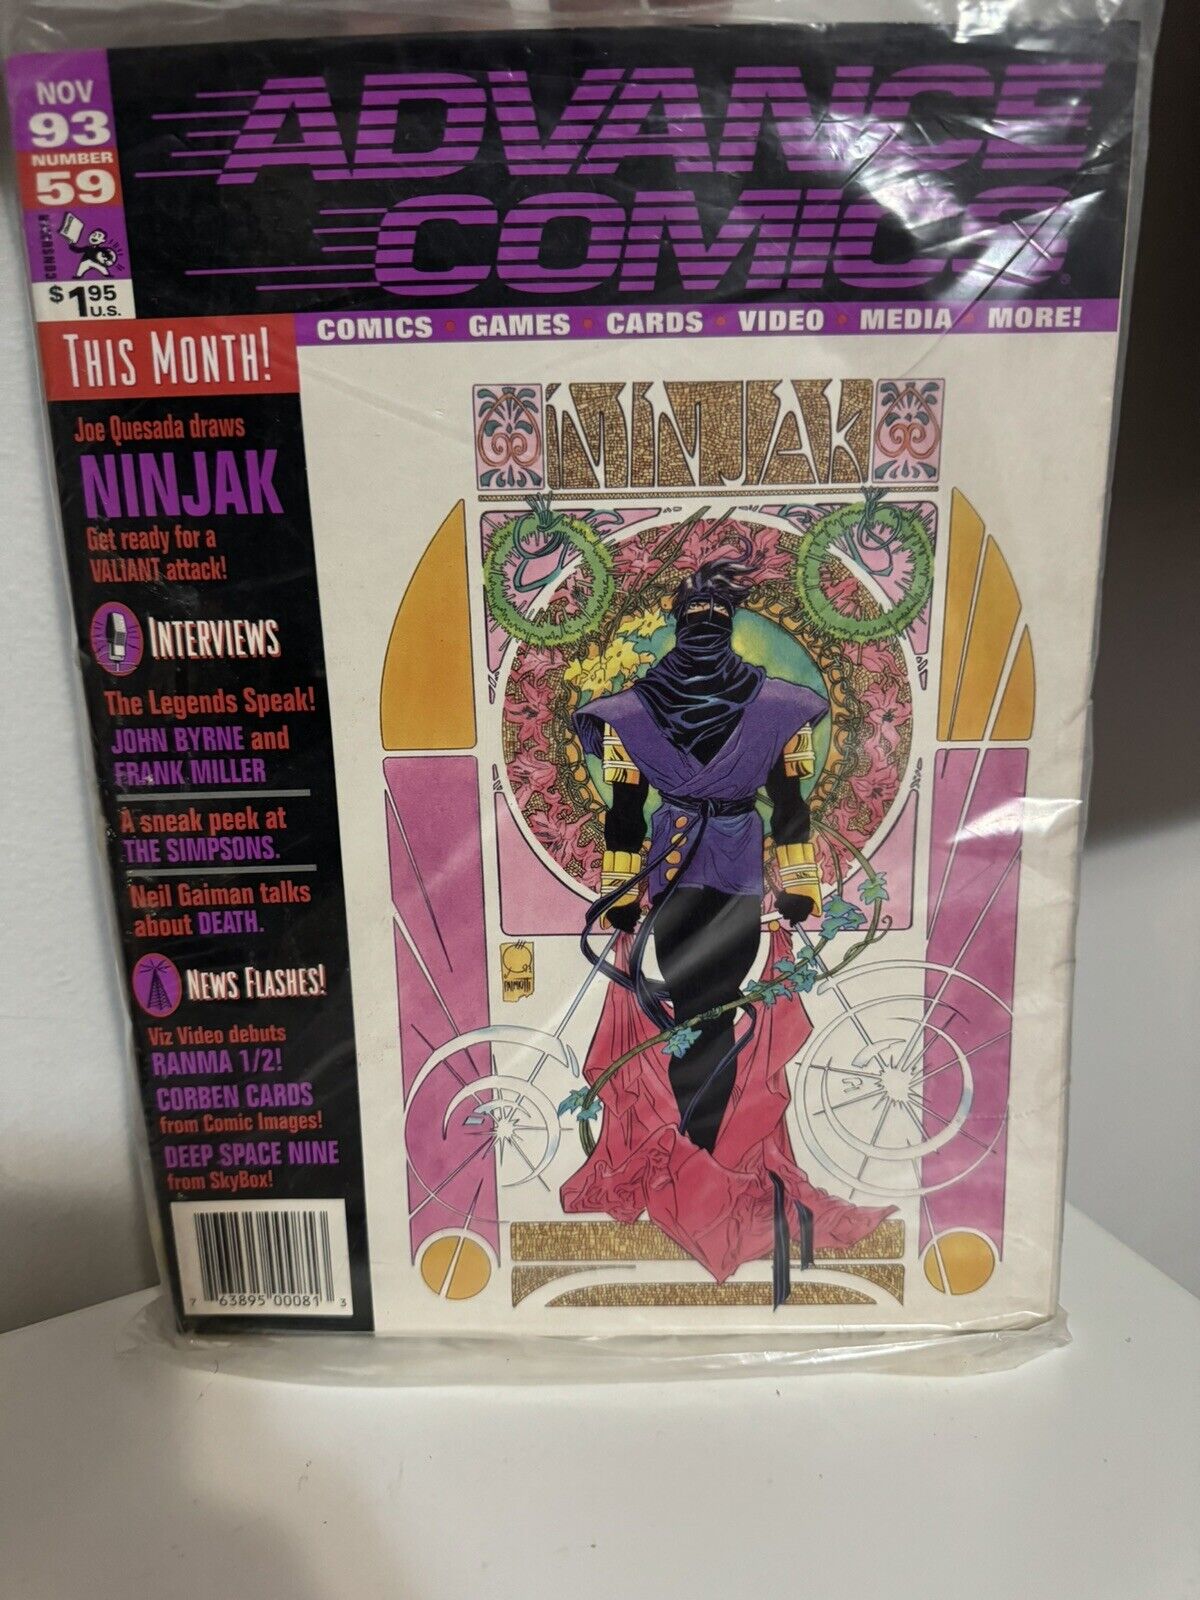 VINTAGE ADVANCE COMICS November 1993 #59 NINJAK *New Sealed*